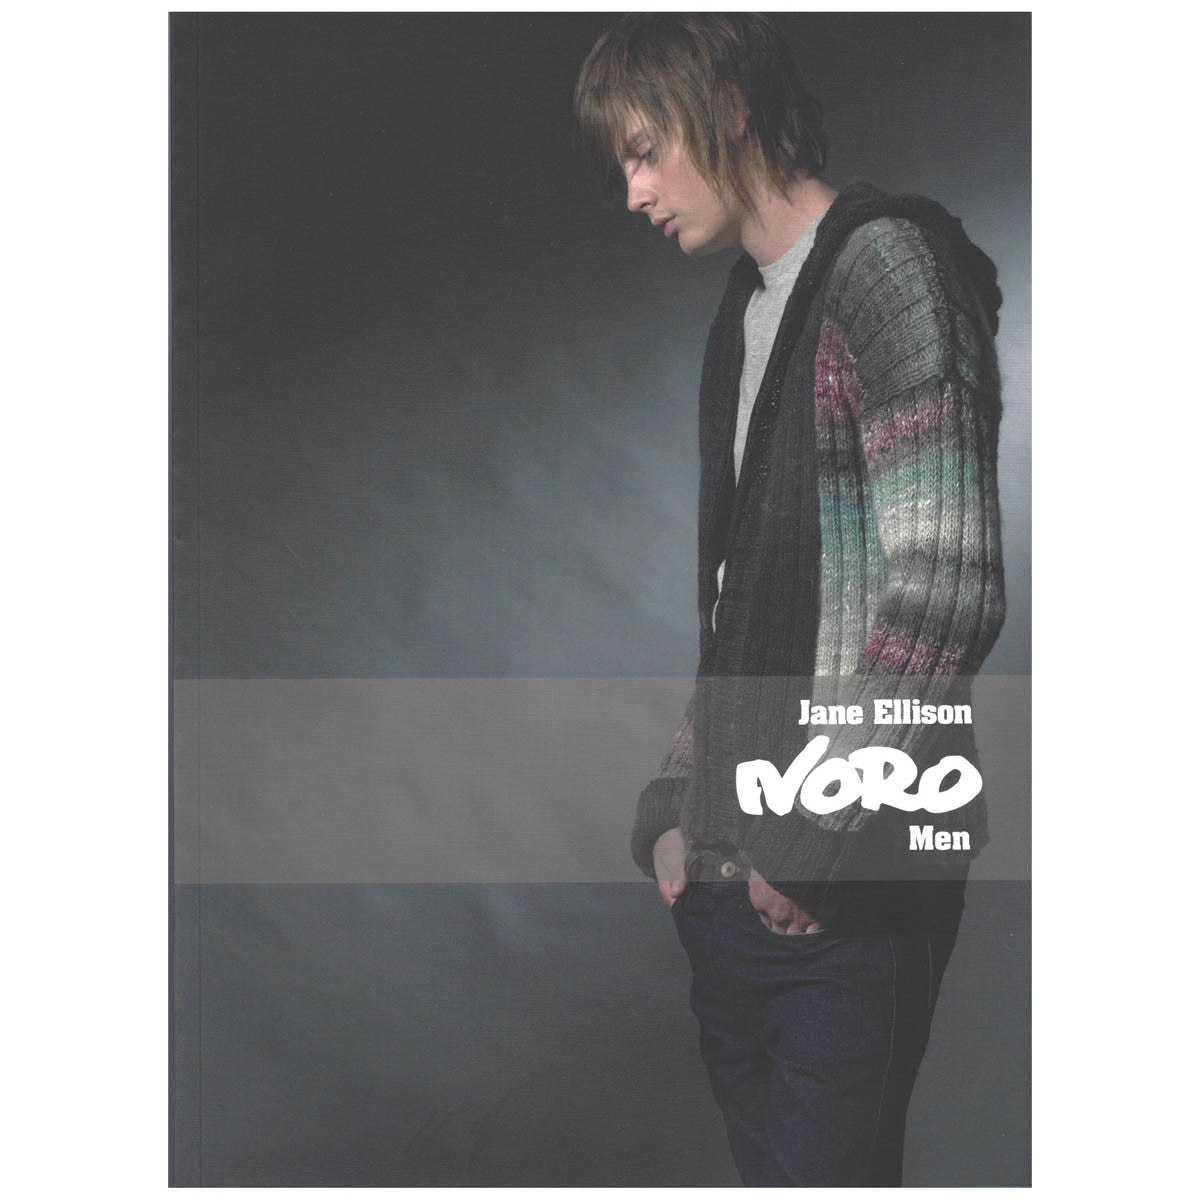 NORO MEN - 17 knitting designs for men - by Jane Ellison